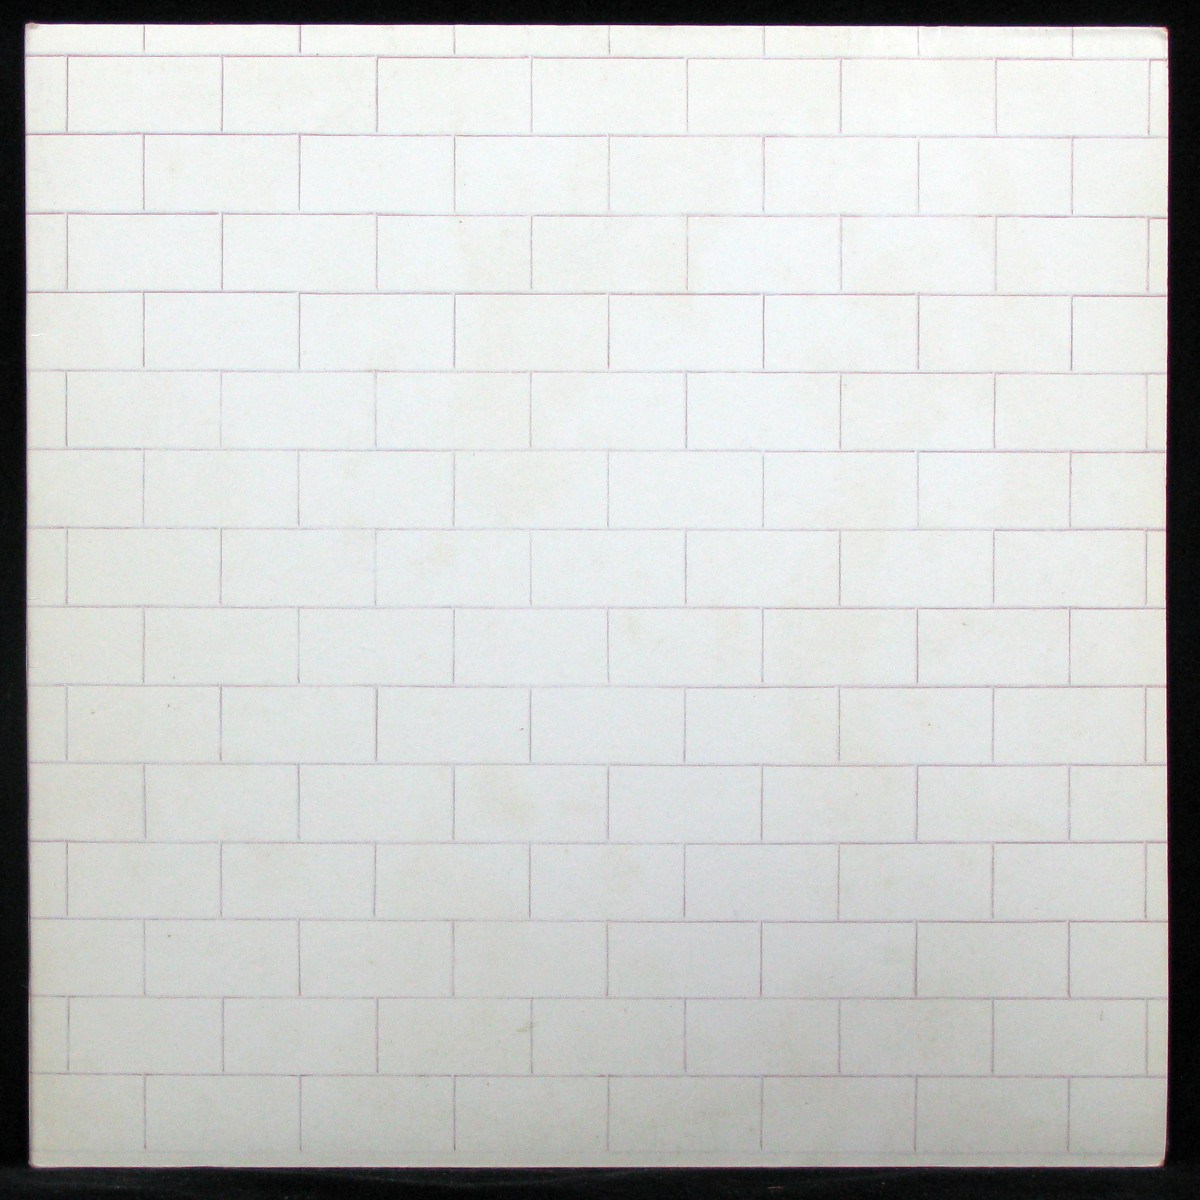 LP Pink Floyd — Wall (2LP) фото